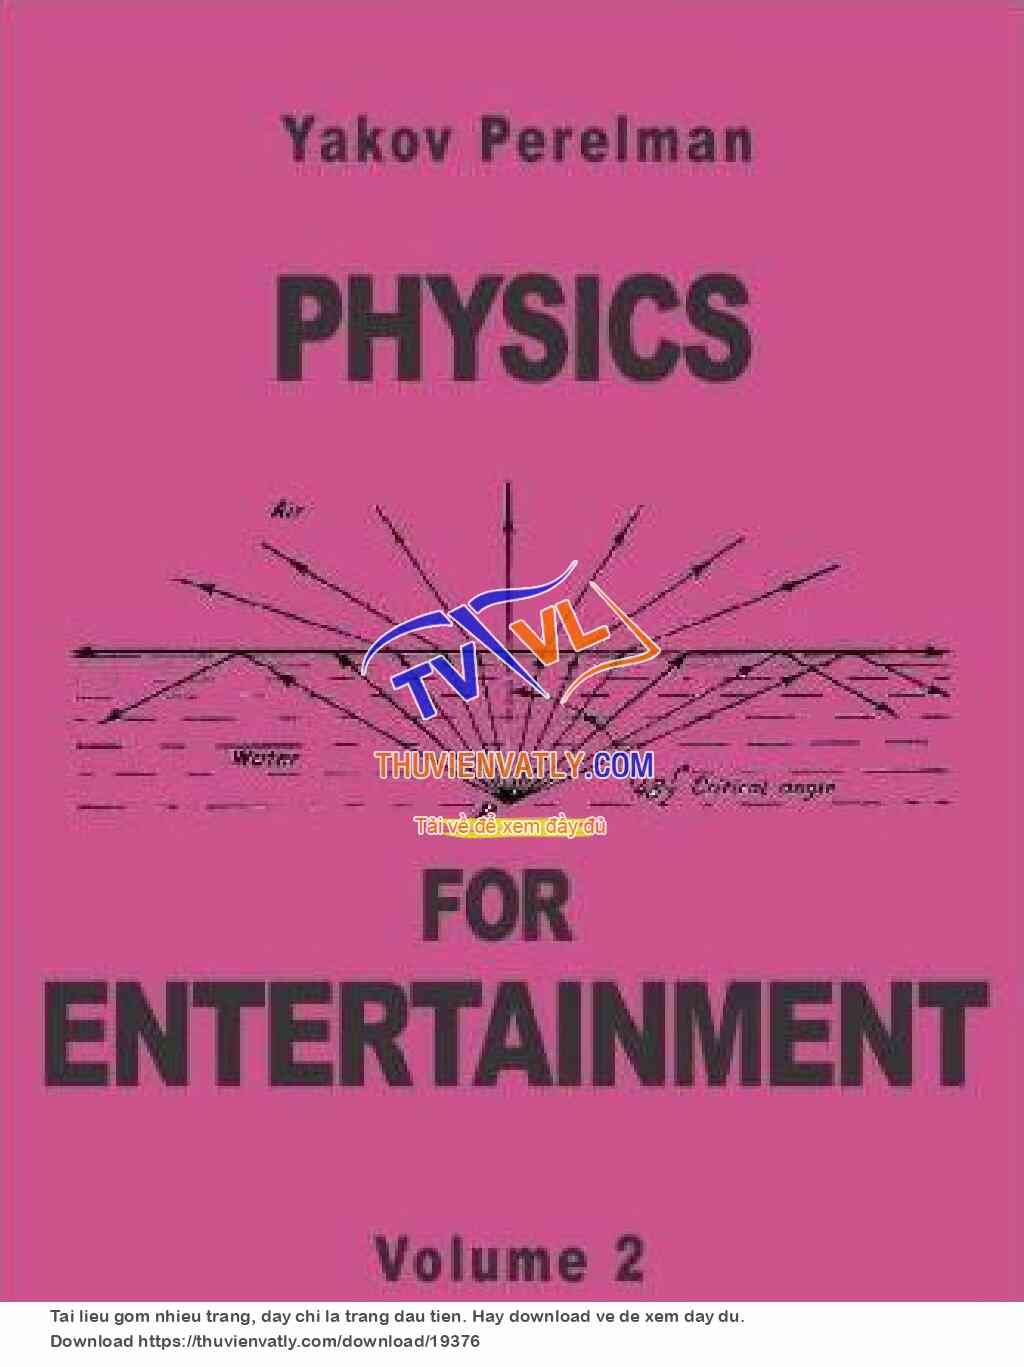 Physics 4 Entertainment 2